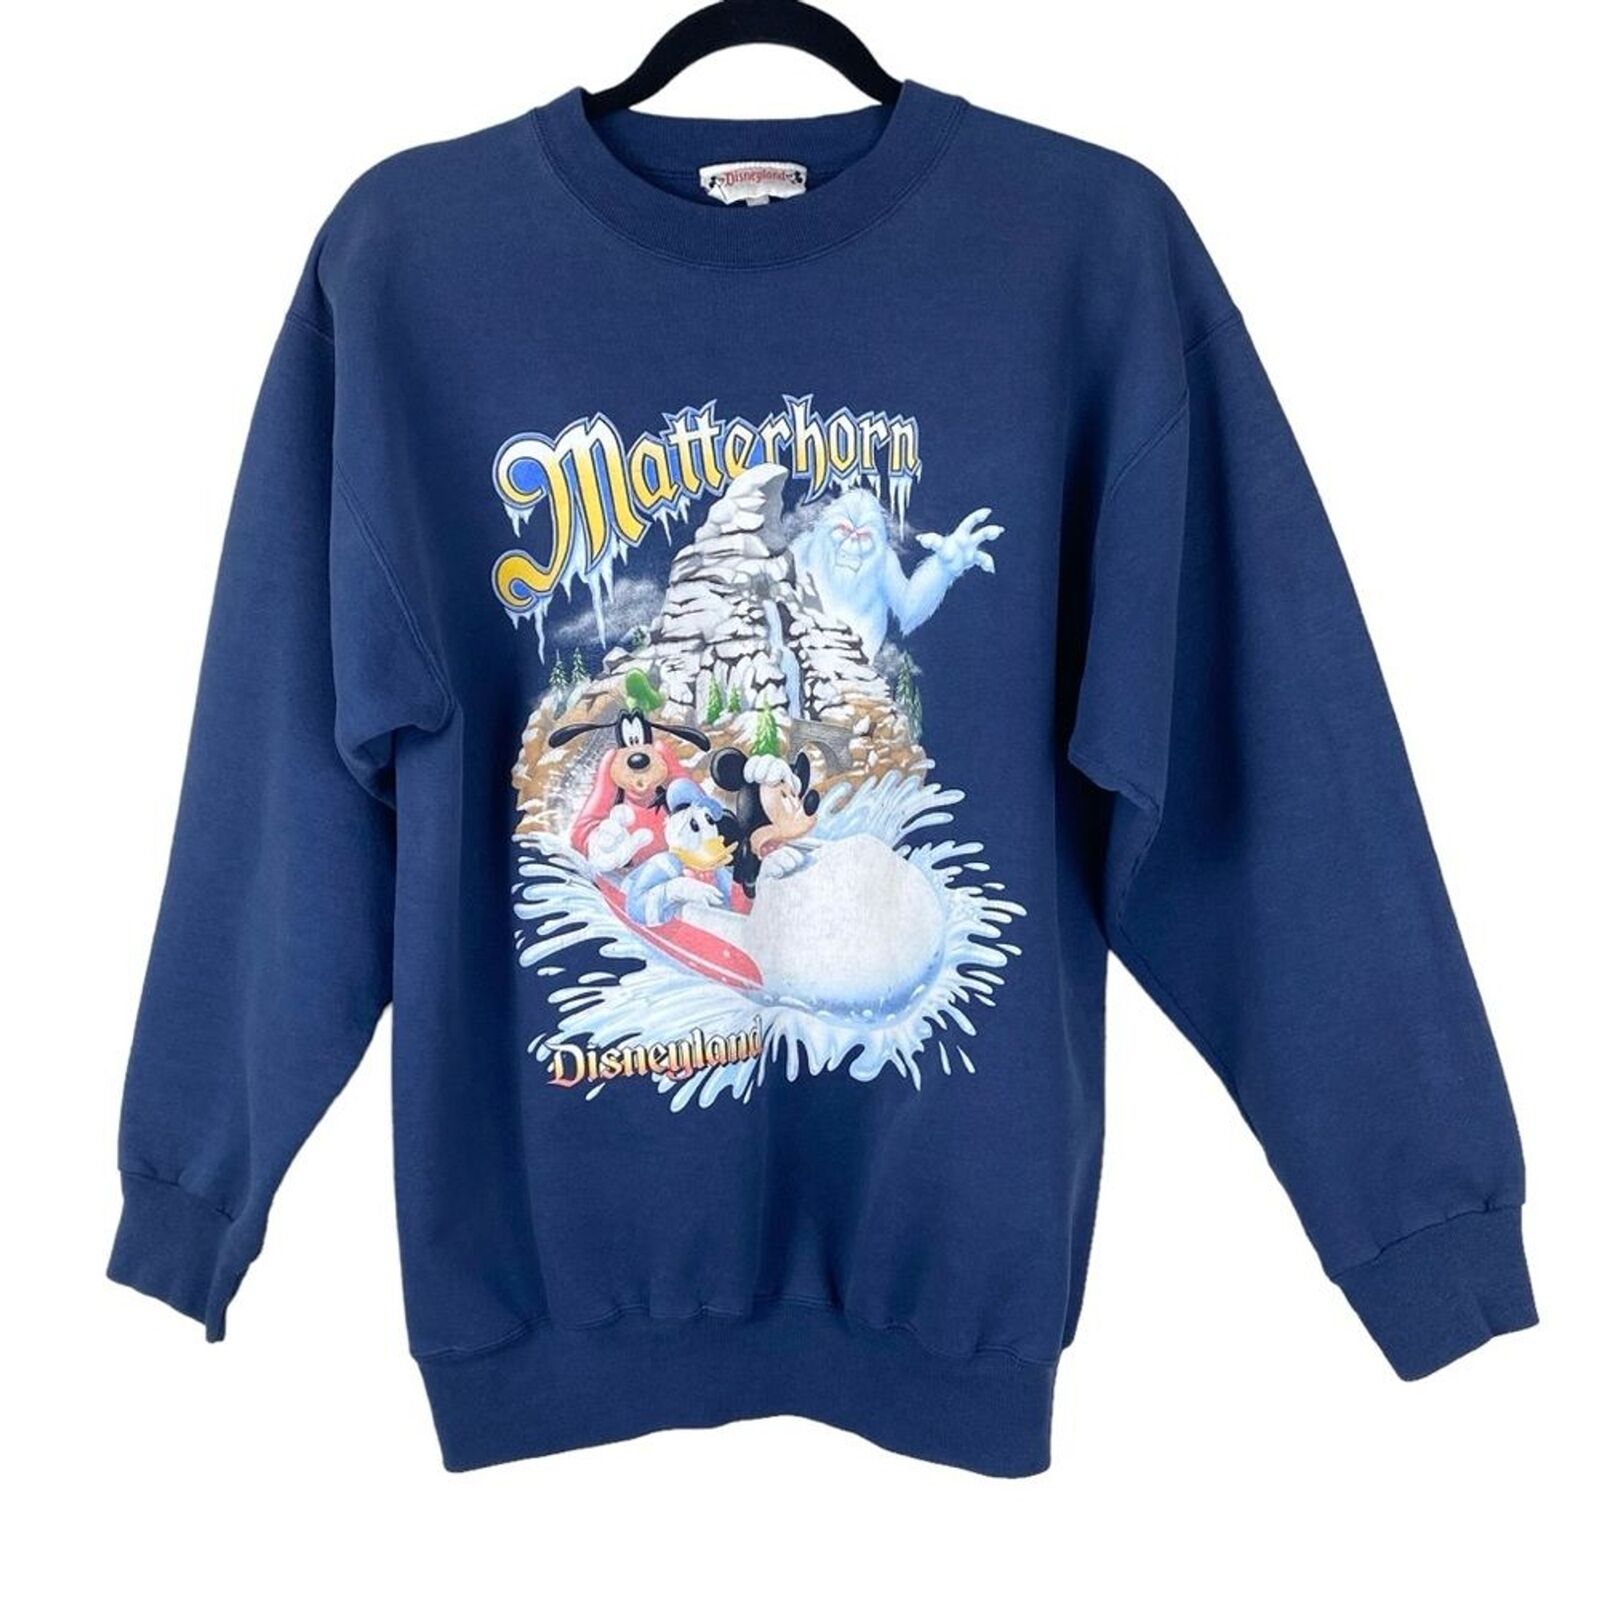 Vtg 90s Disney Matterhorn Graphic Sweatshirt Sz S M Blue USA Crewneck